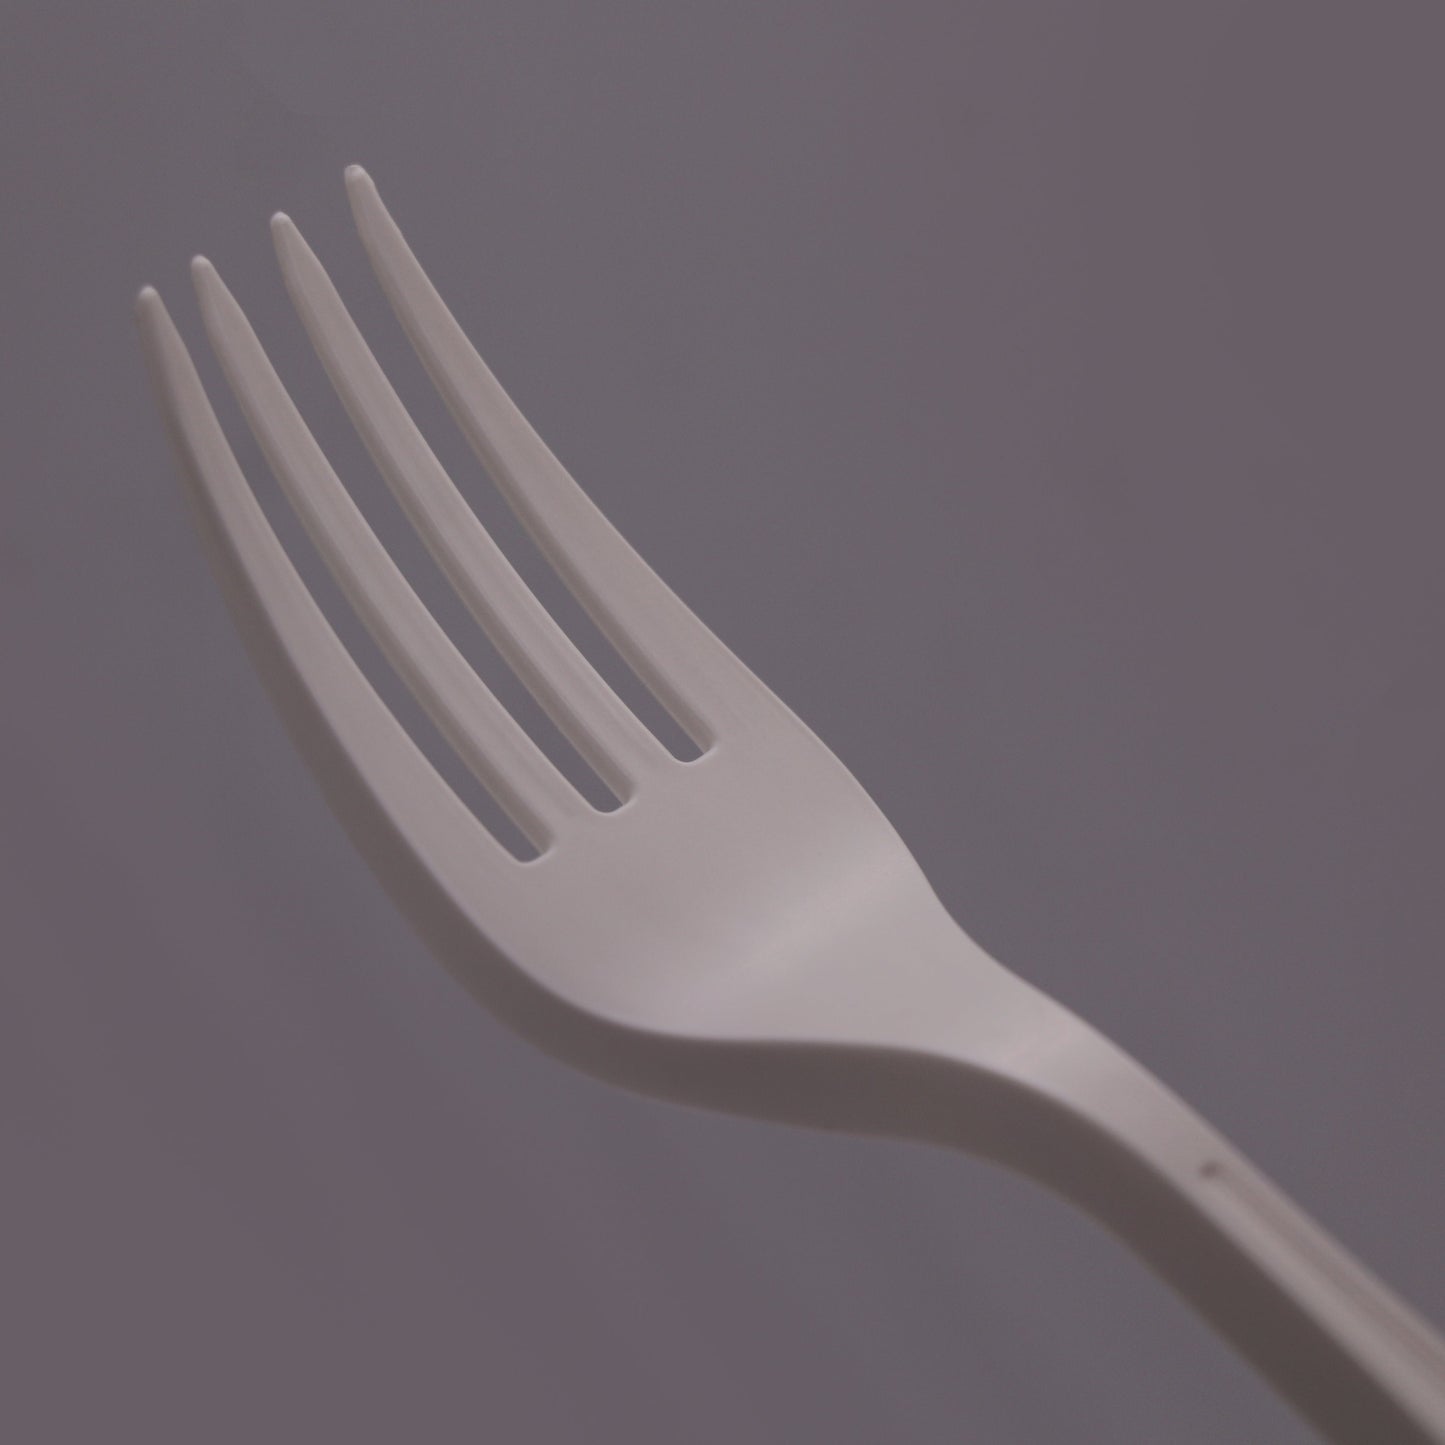 Premium Biodegradable Forks [Pack of 25]